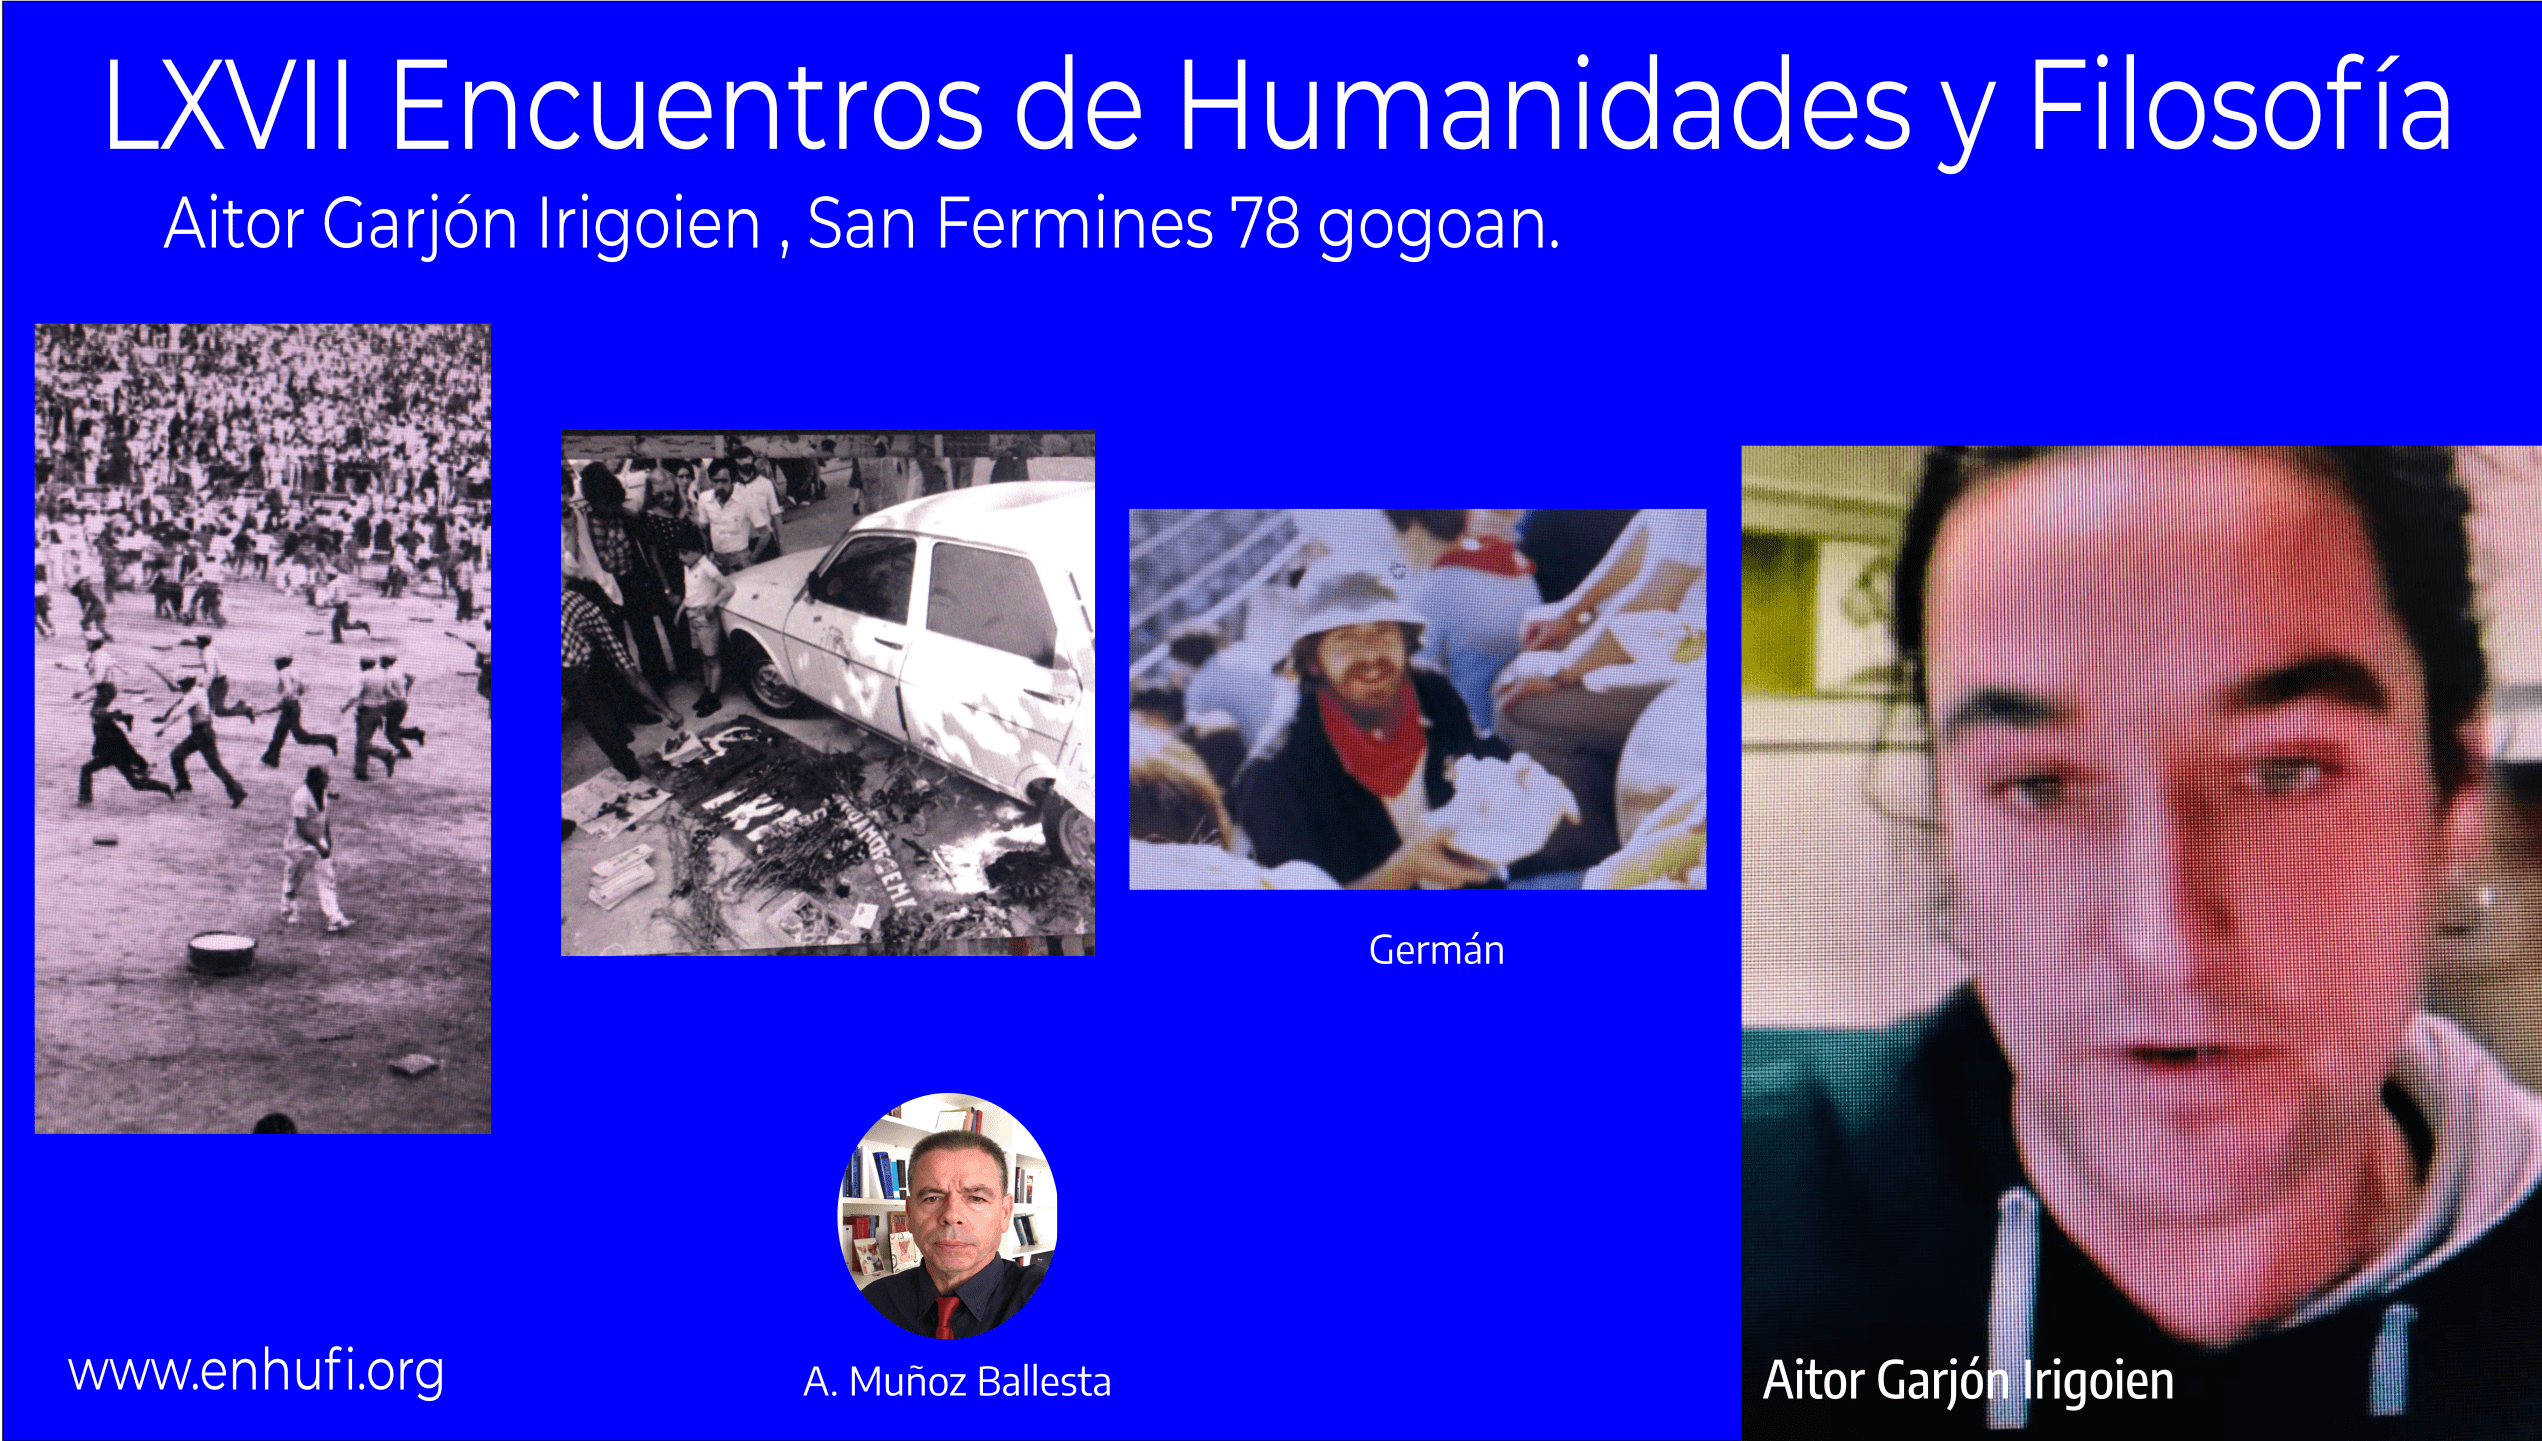 LXVII Encuentros Humanidades y Filosofía, Aitor Garjón Irigoien , san Fermines 78 gogoan . 